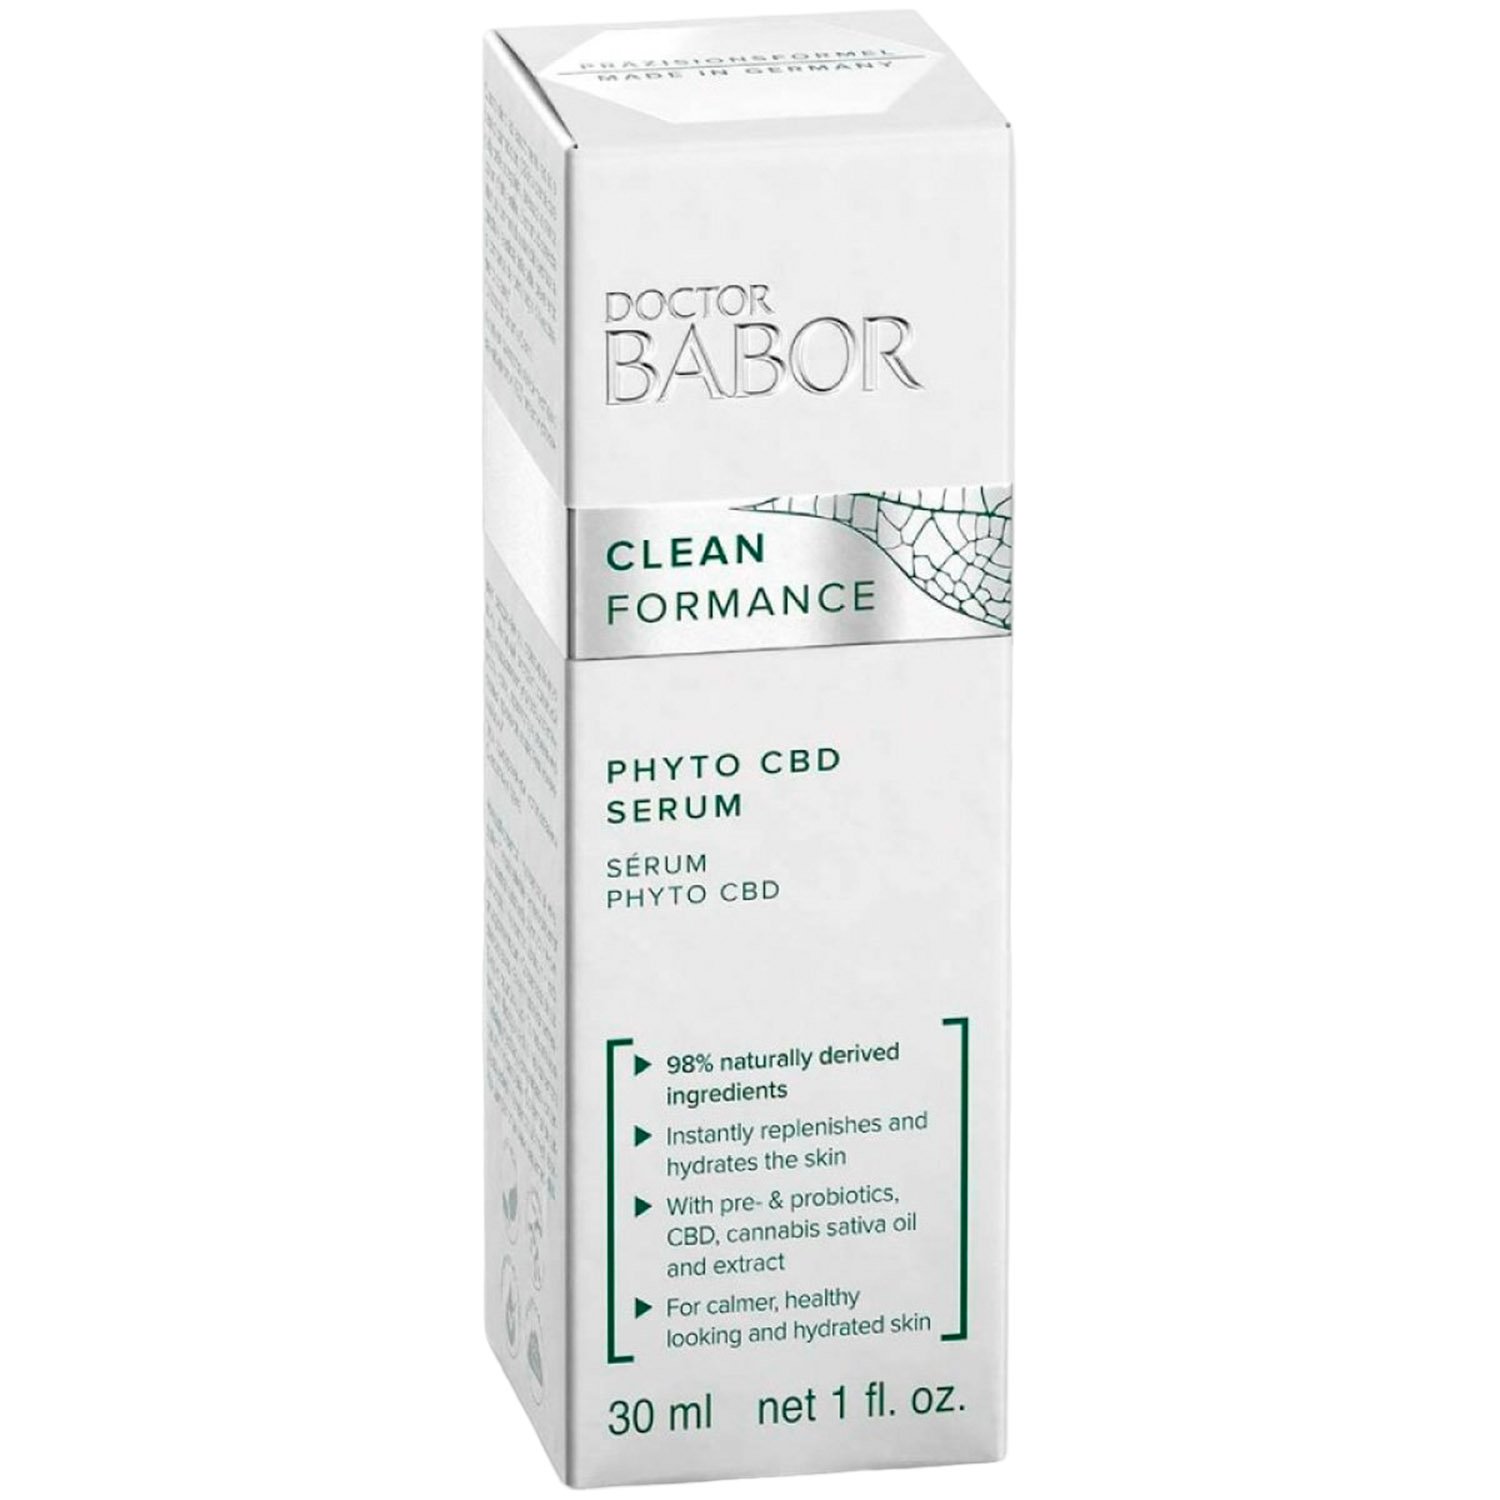 Заспокійлива релакс-сироватка Babor Doctor Babor Clean Formance Phyto CBD Serum, 50 мл - фото 2